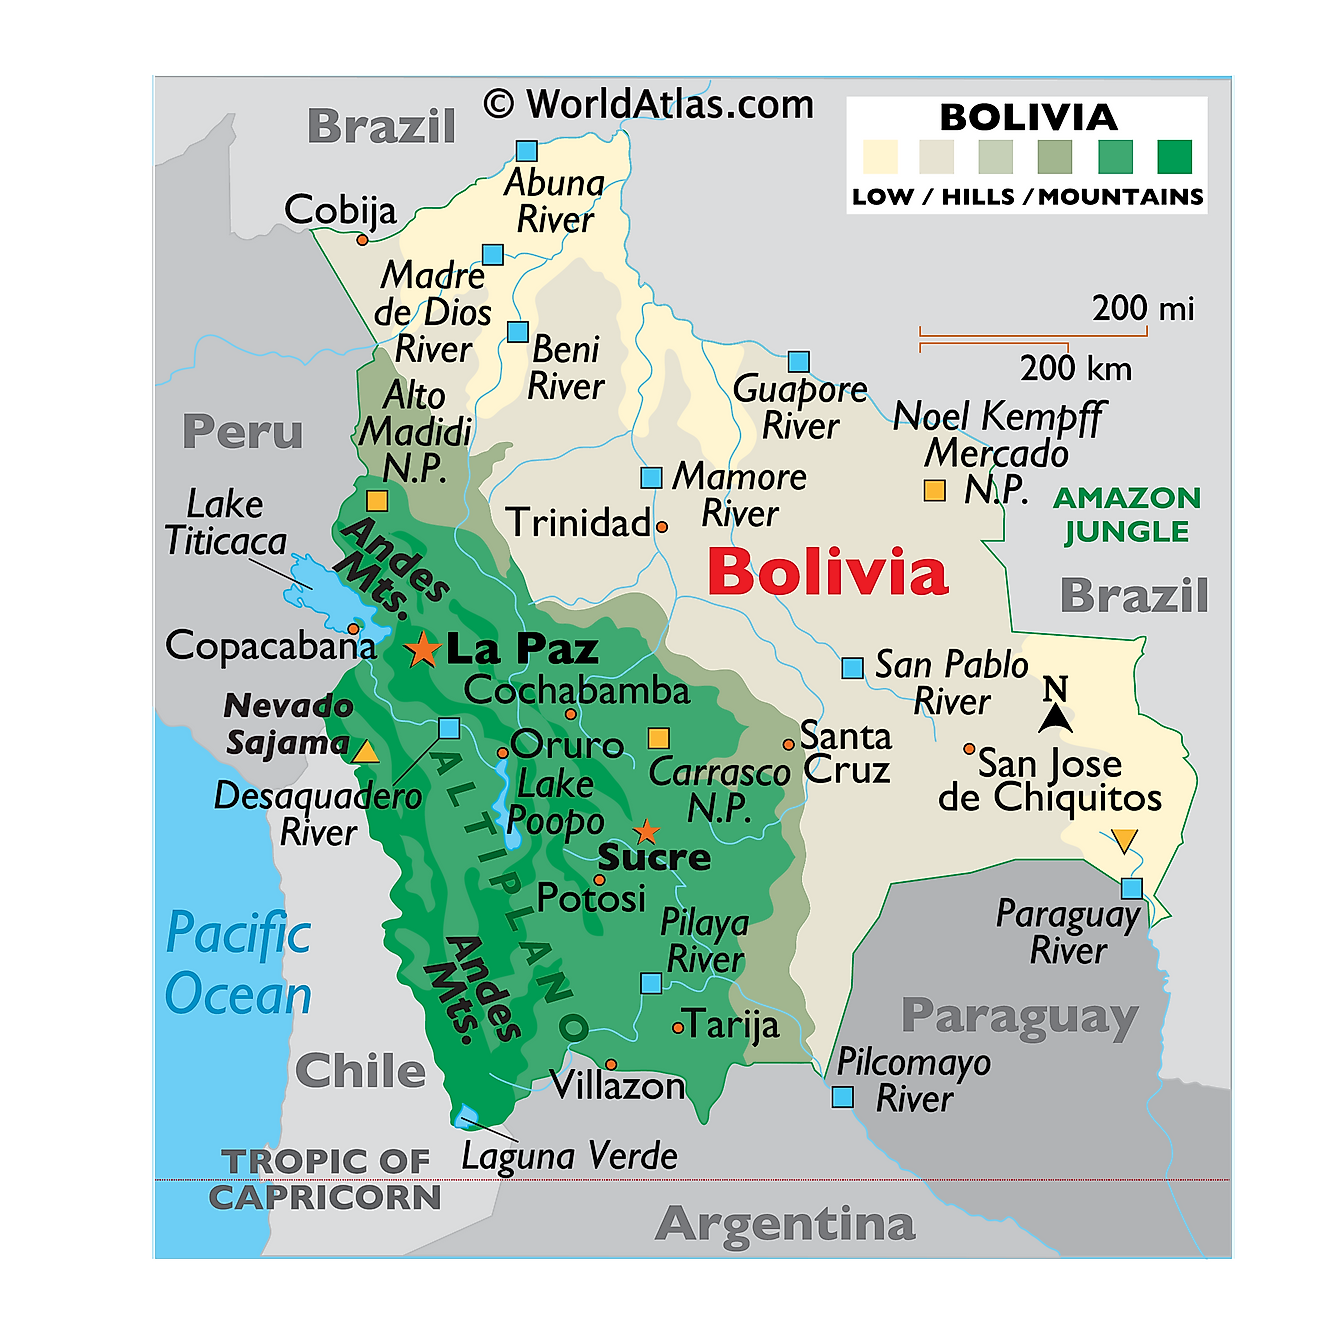 What Hemisphere Is Bolivia In